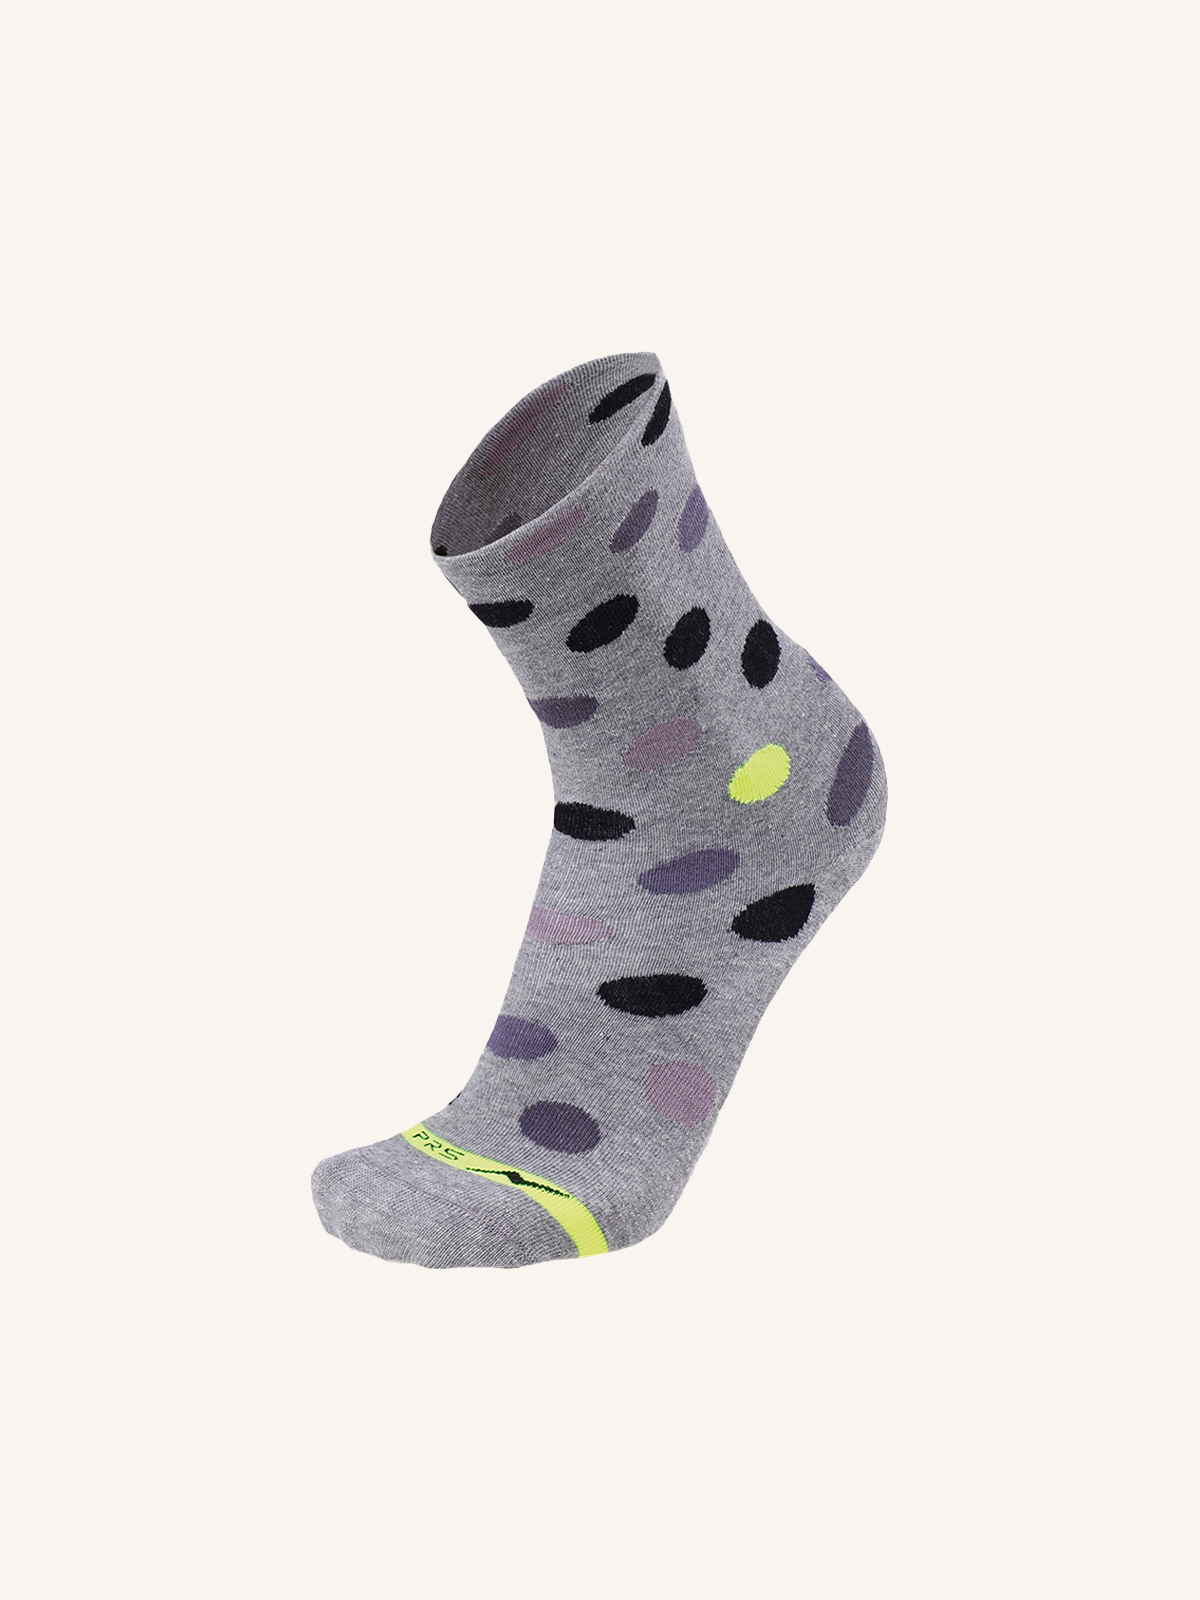 Cotton Short Sock for Men | Patterned | Single Pack | Urban Socks PRS 04